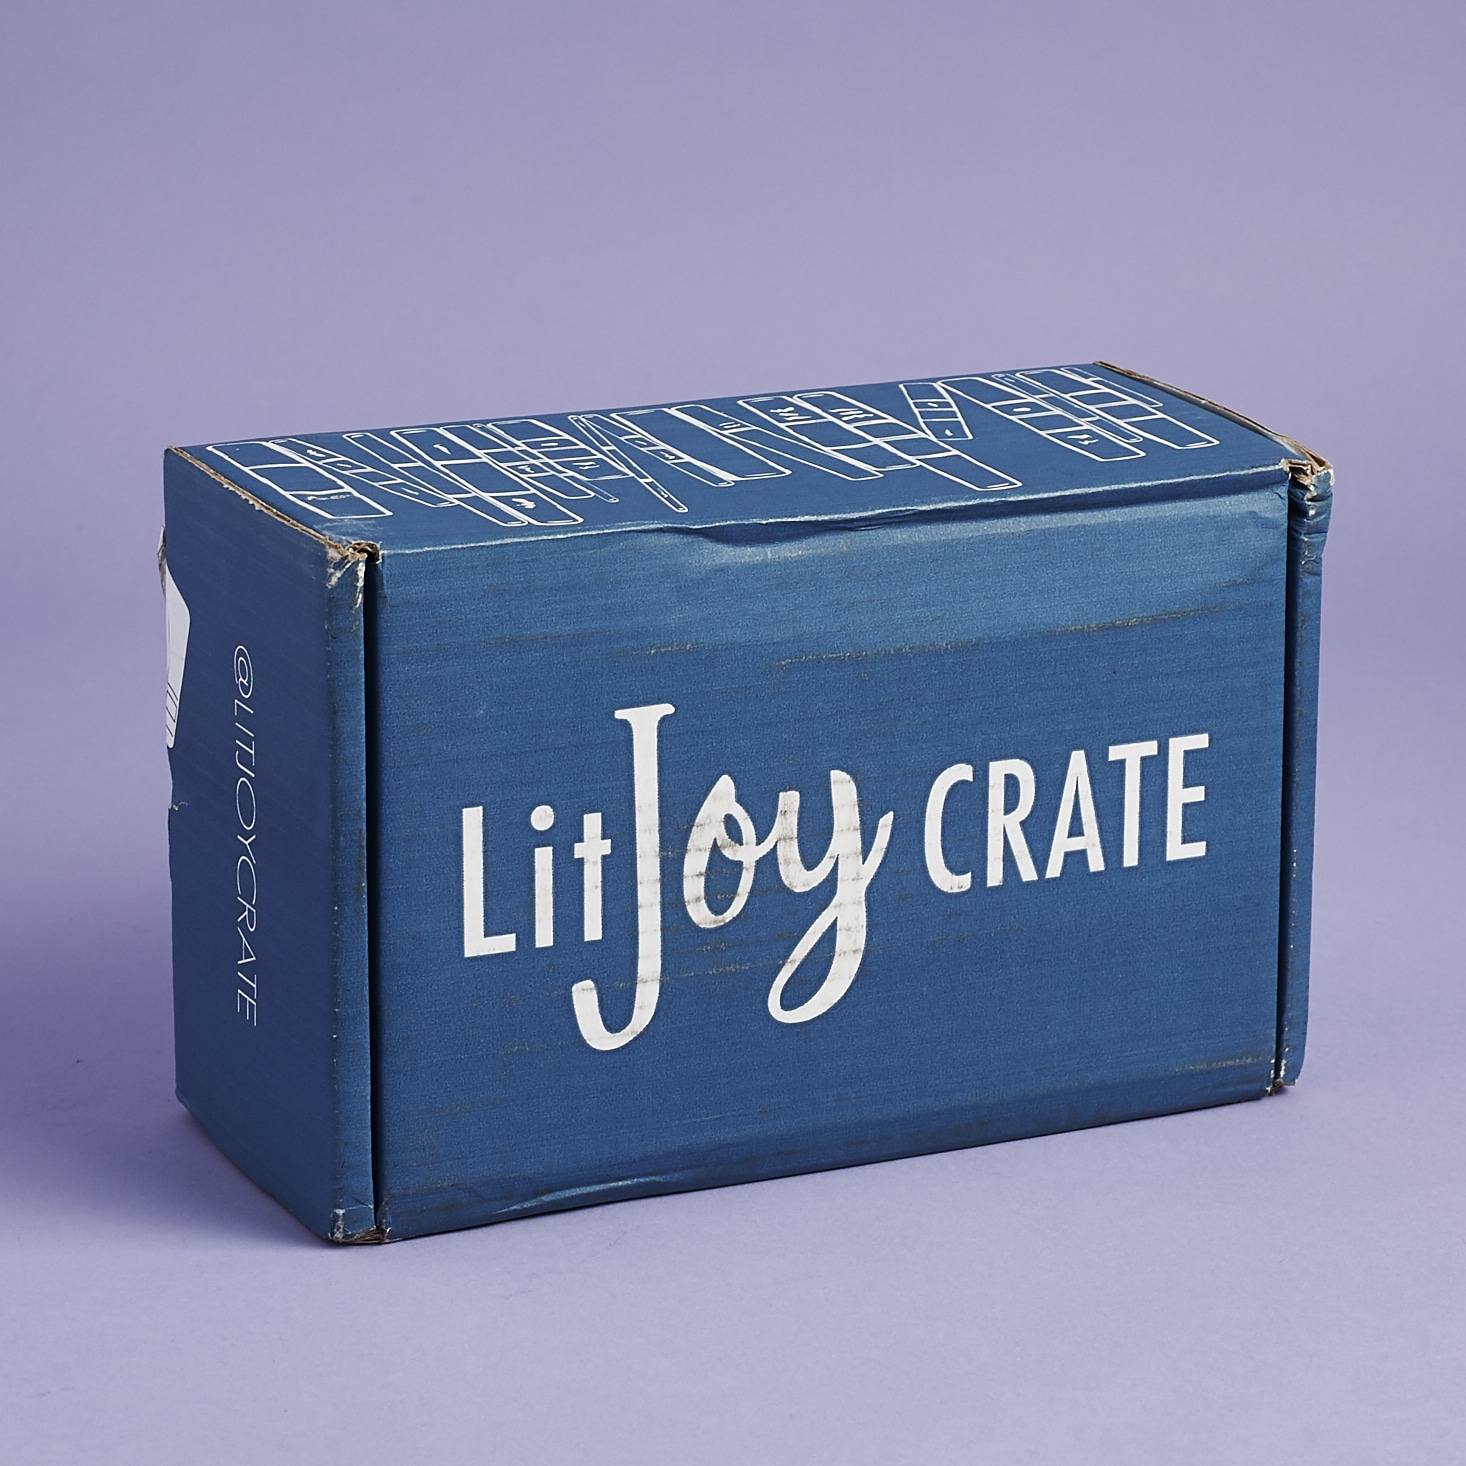 LitJoy Crate YA Subscription Box Review – June 2017